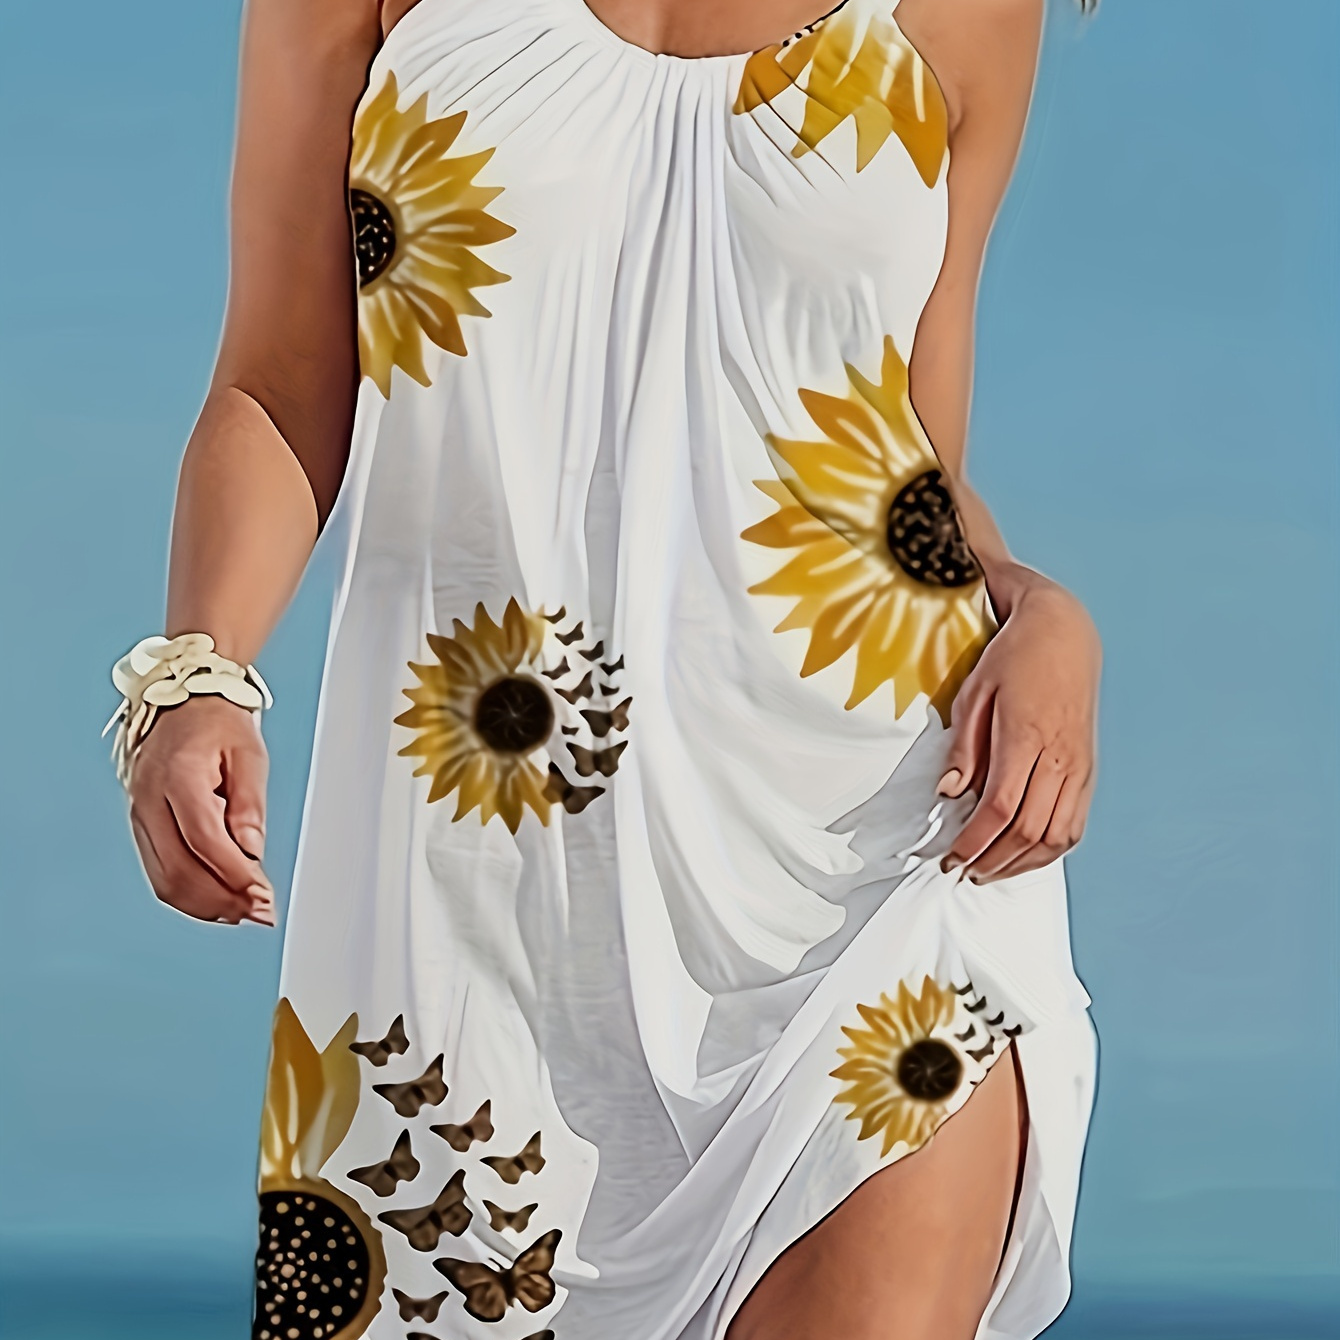 

Sunflower Print Cami Dress, Vacation Sleeveless Loose Dress For Summer, Women's Clothing